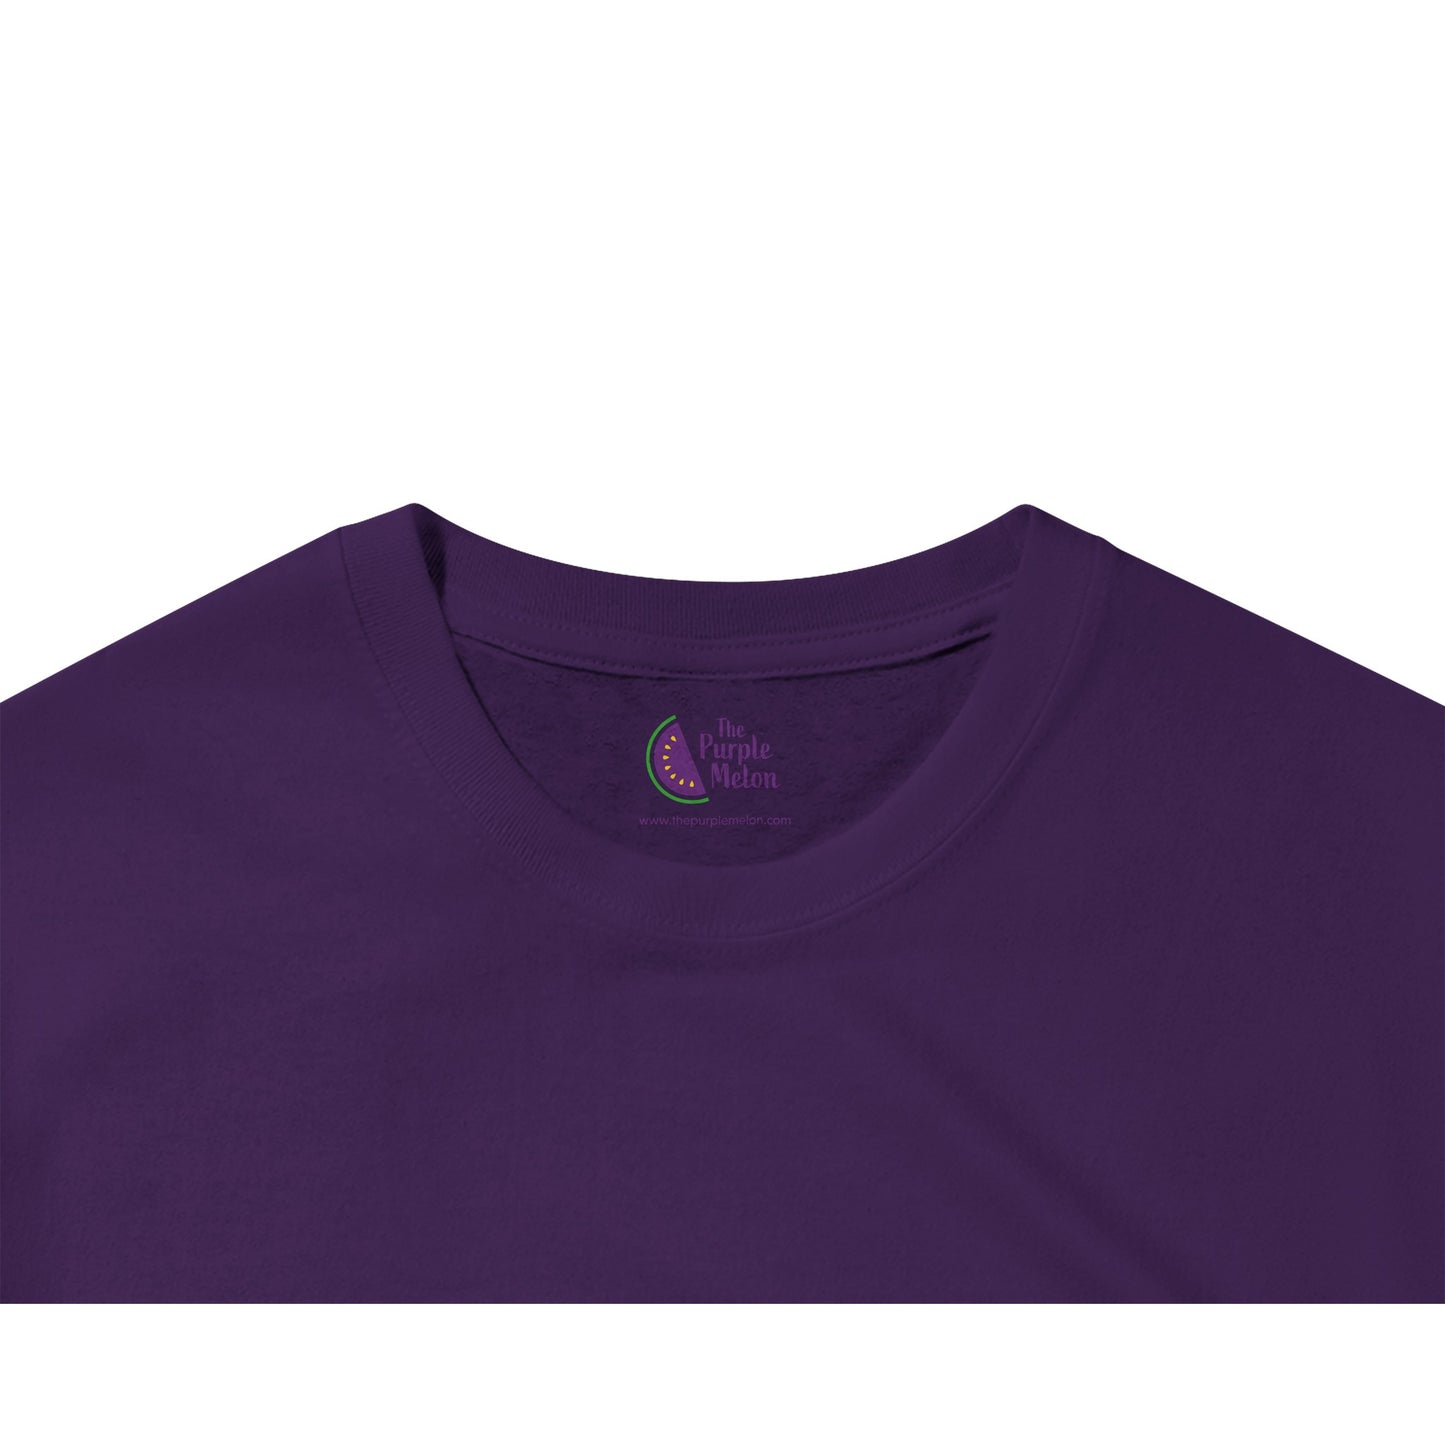 Purple t-shirt neck label with The Purple Melon logo